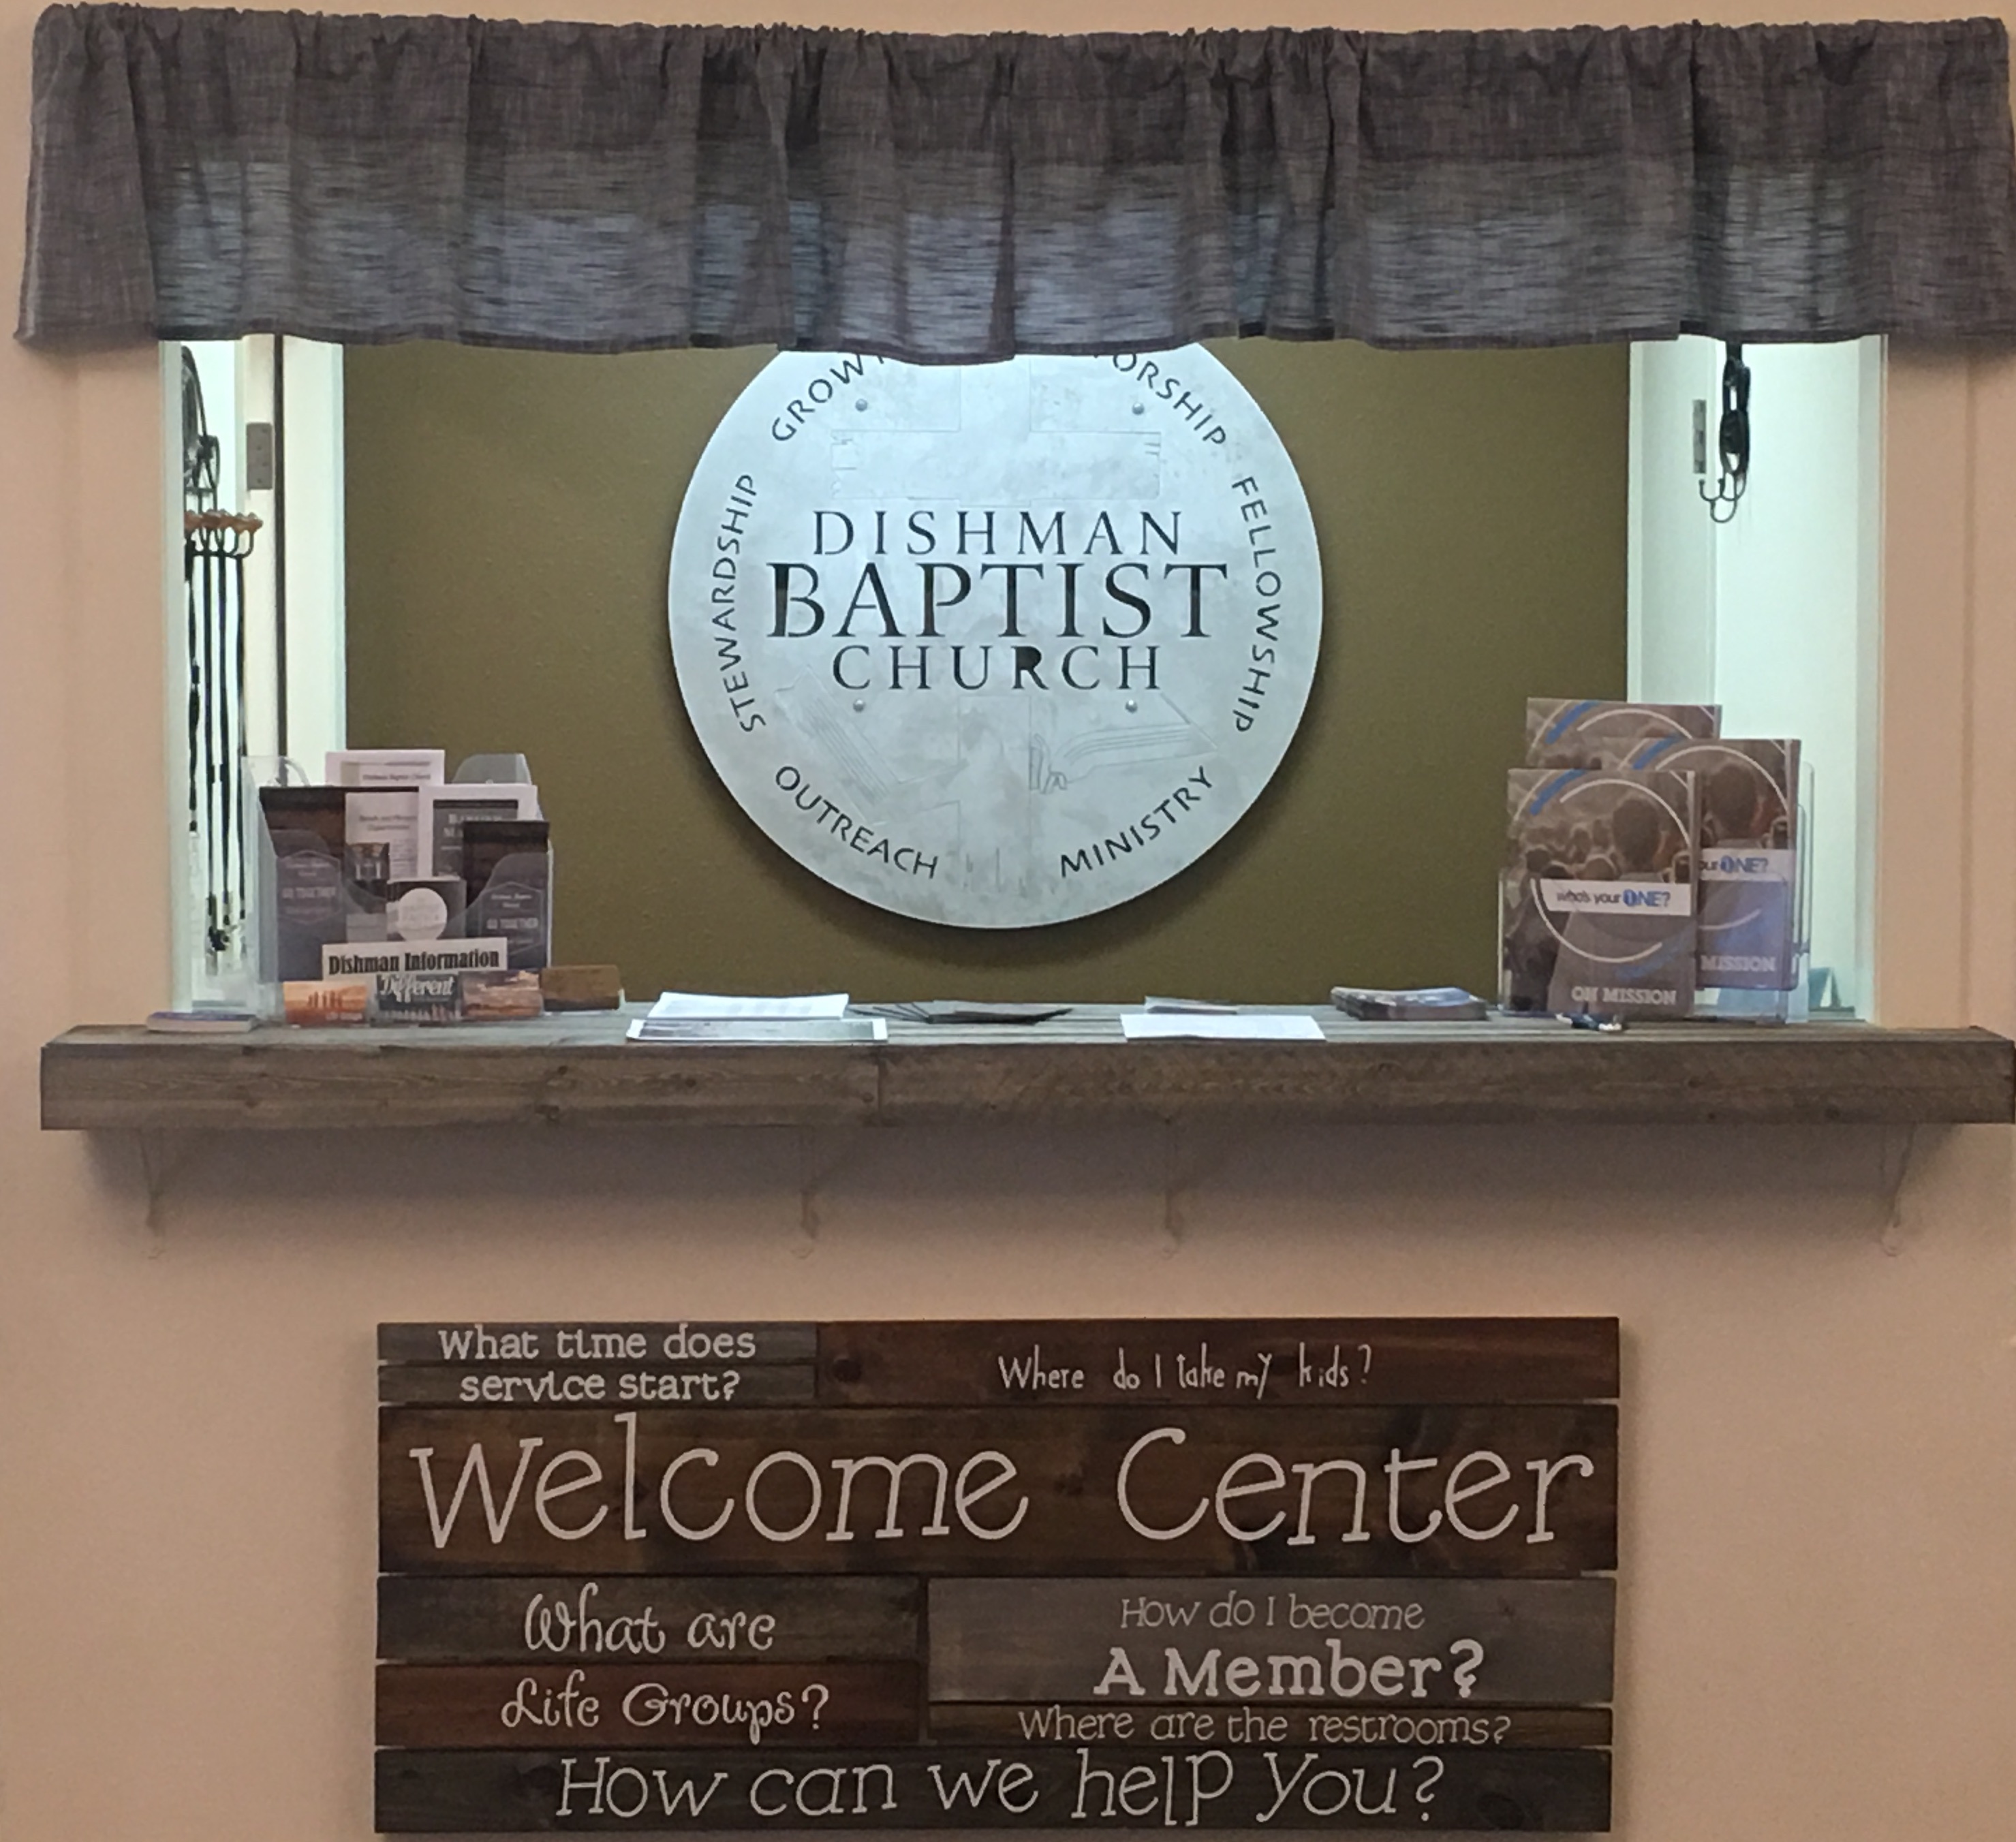 Visiting Dishman Baptist Church